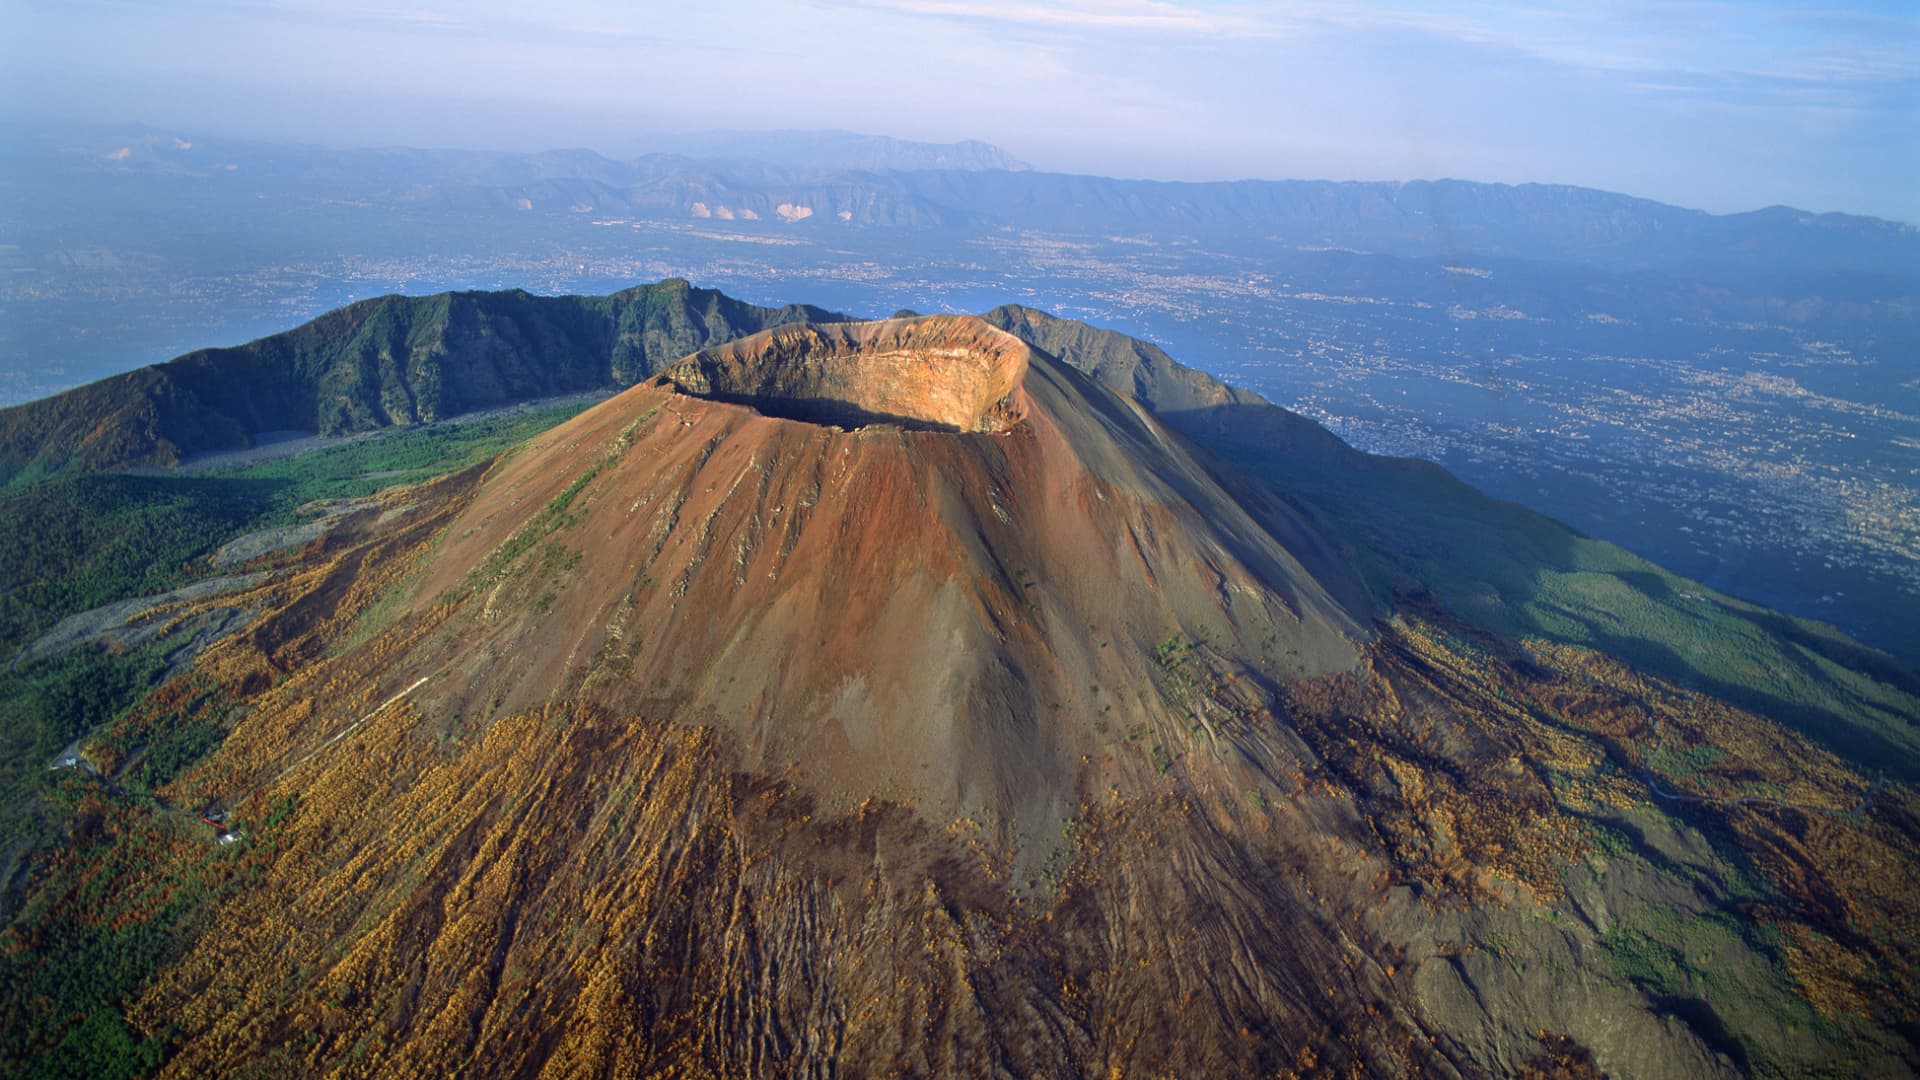 The summit caldera of Mount Vesuvius, near the Bay of Naples.